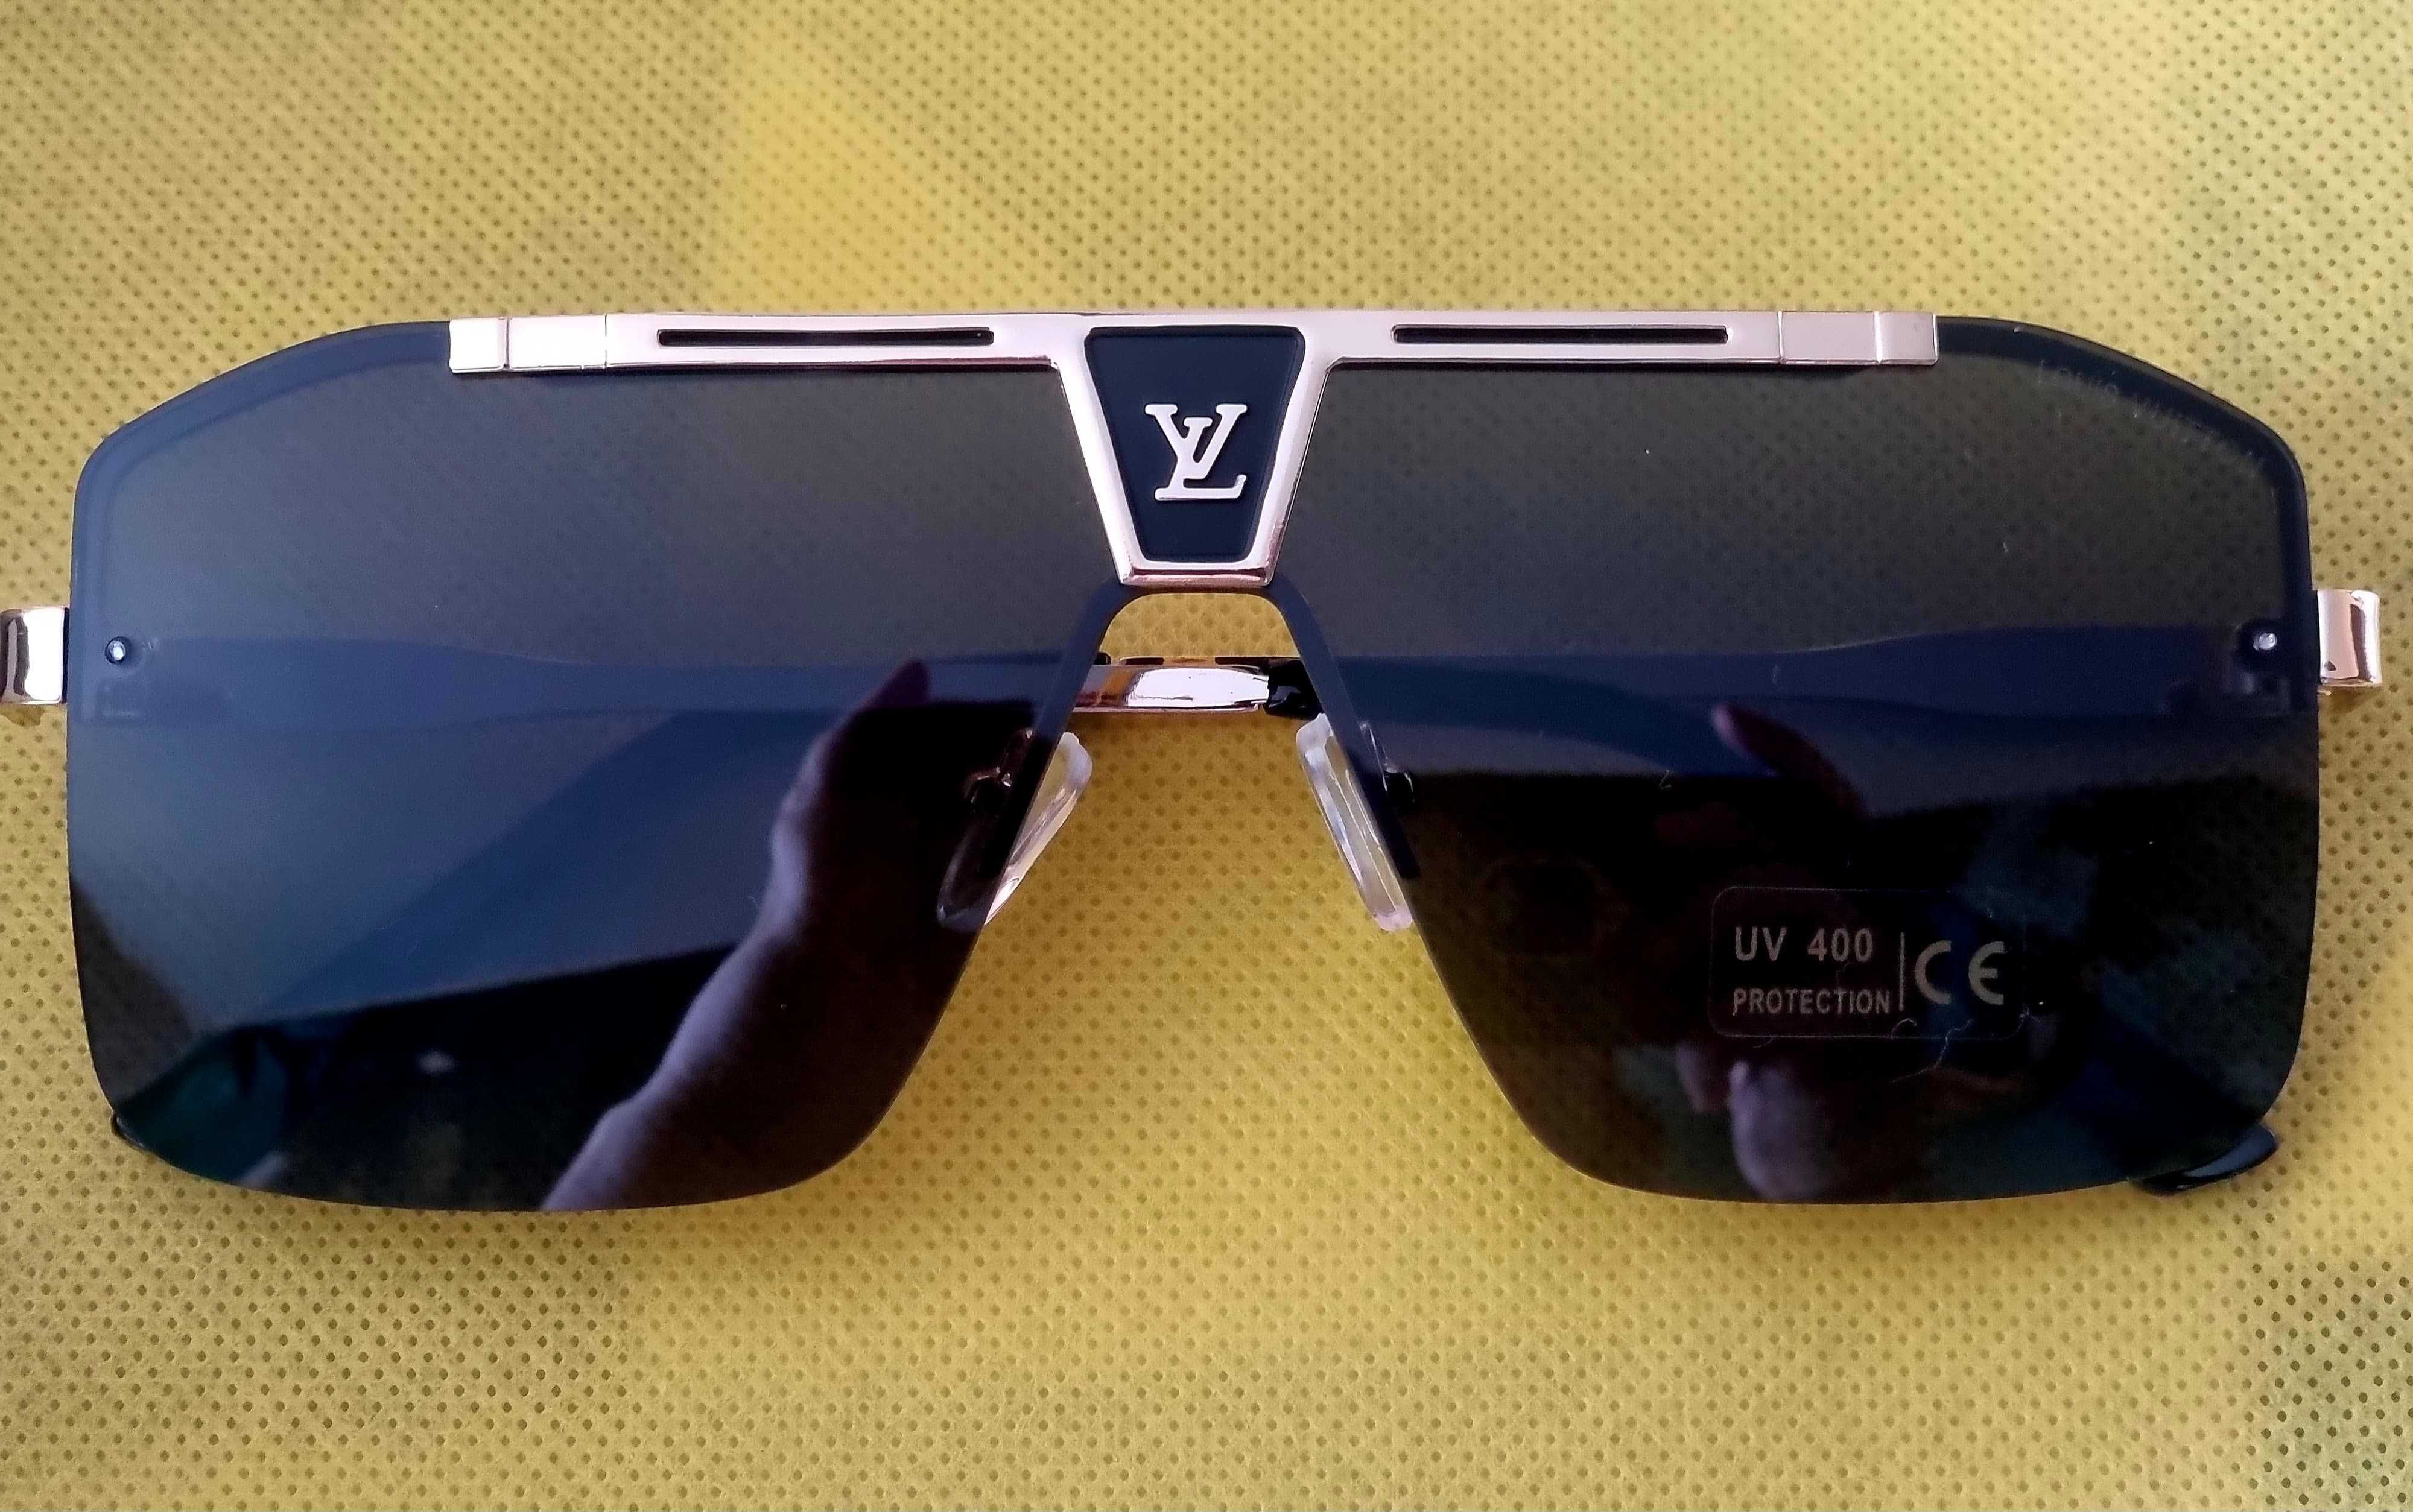 Ochelari de soare Louis Vuitton model 2, Transport Gratuit